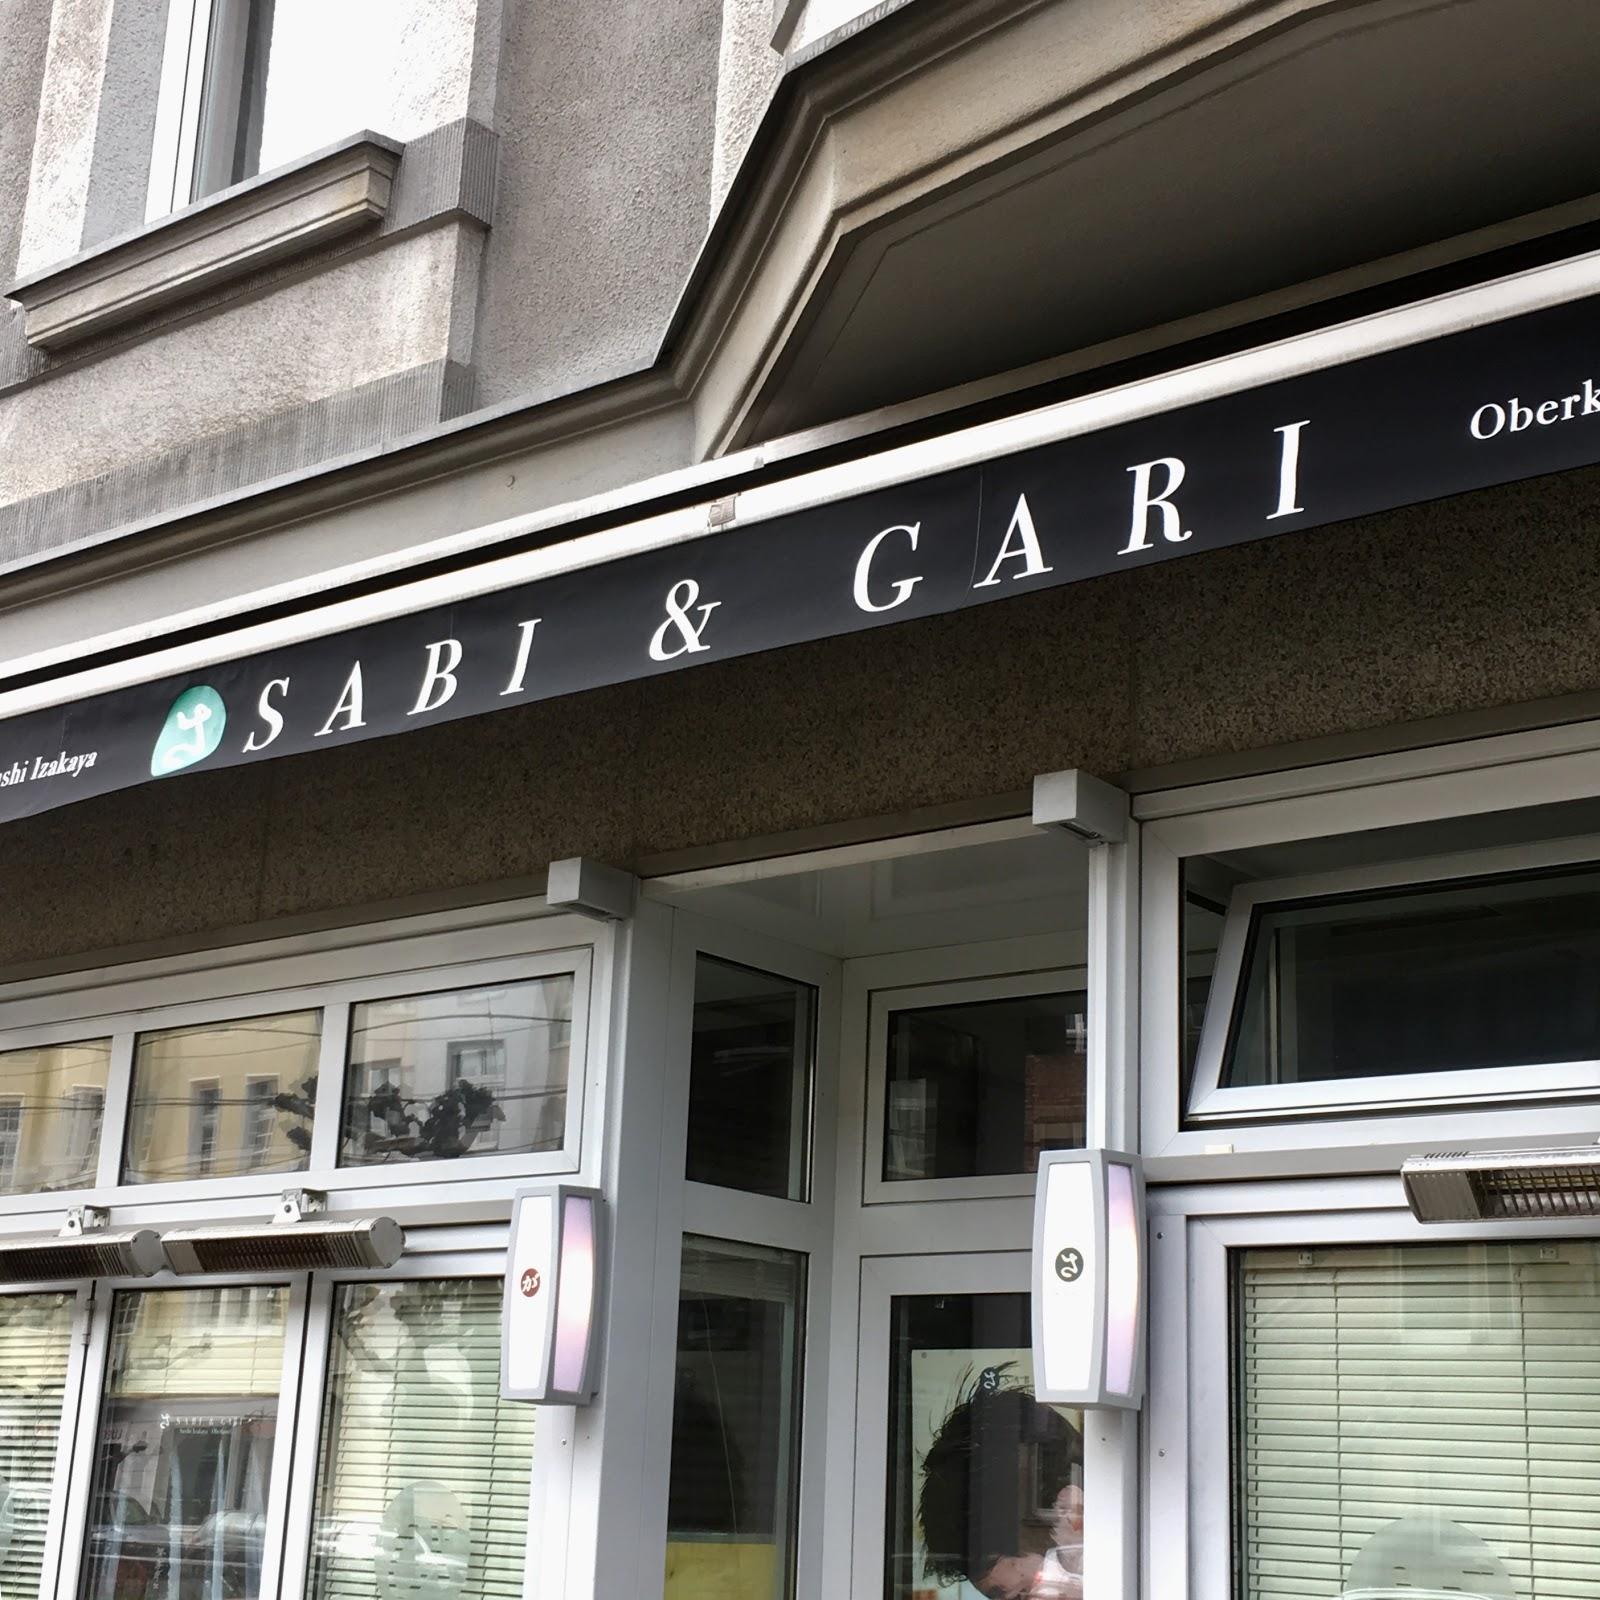 Restaurant "SABI & GARI" in Düsseldorf